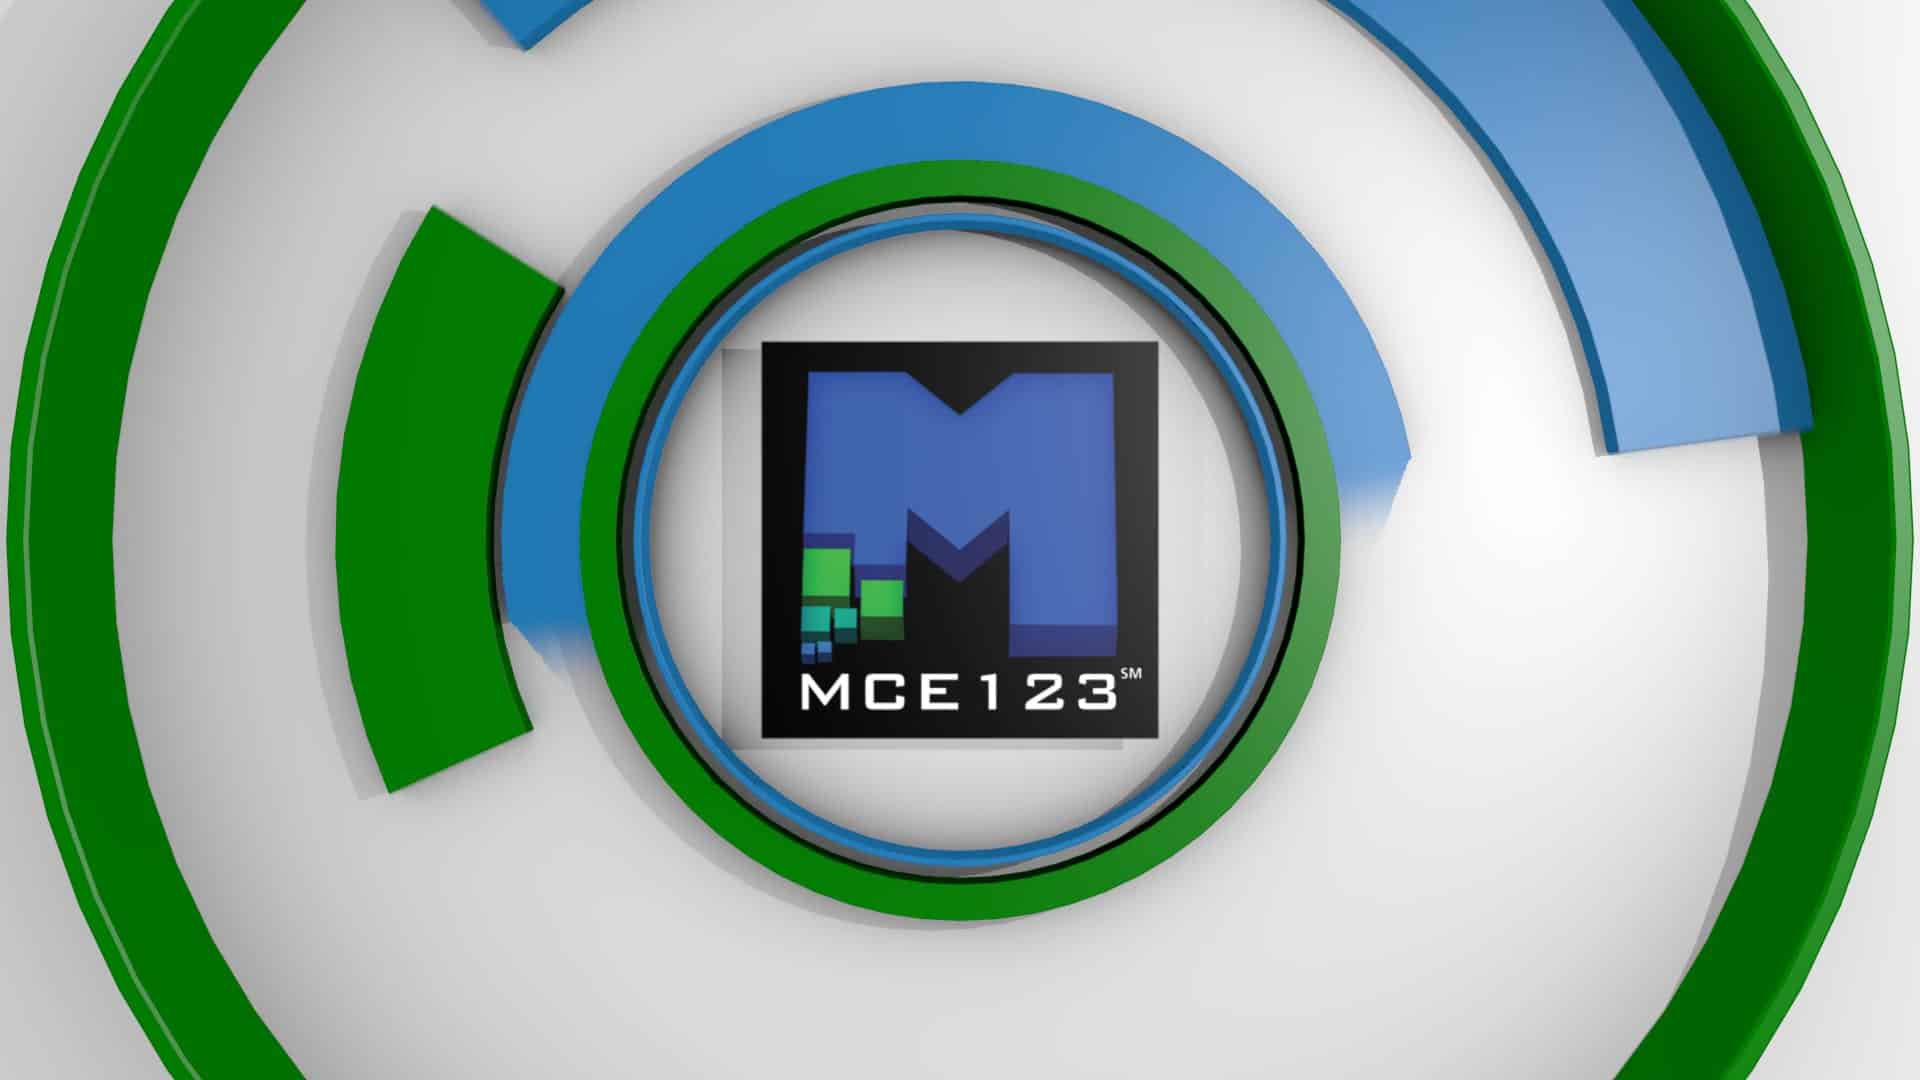 MCE123 Circular Transition Intro Video